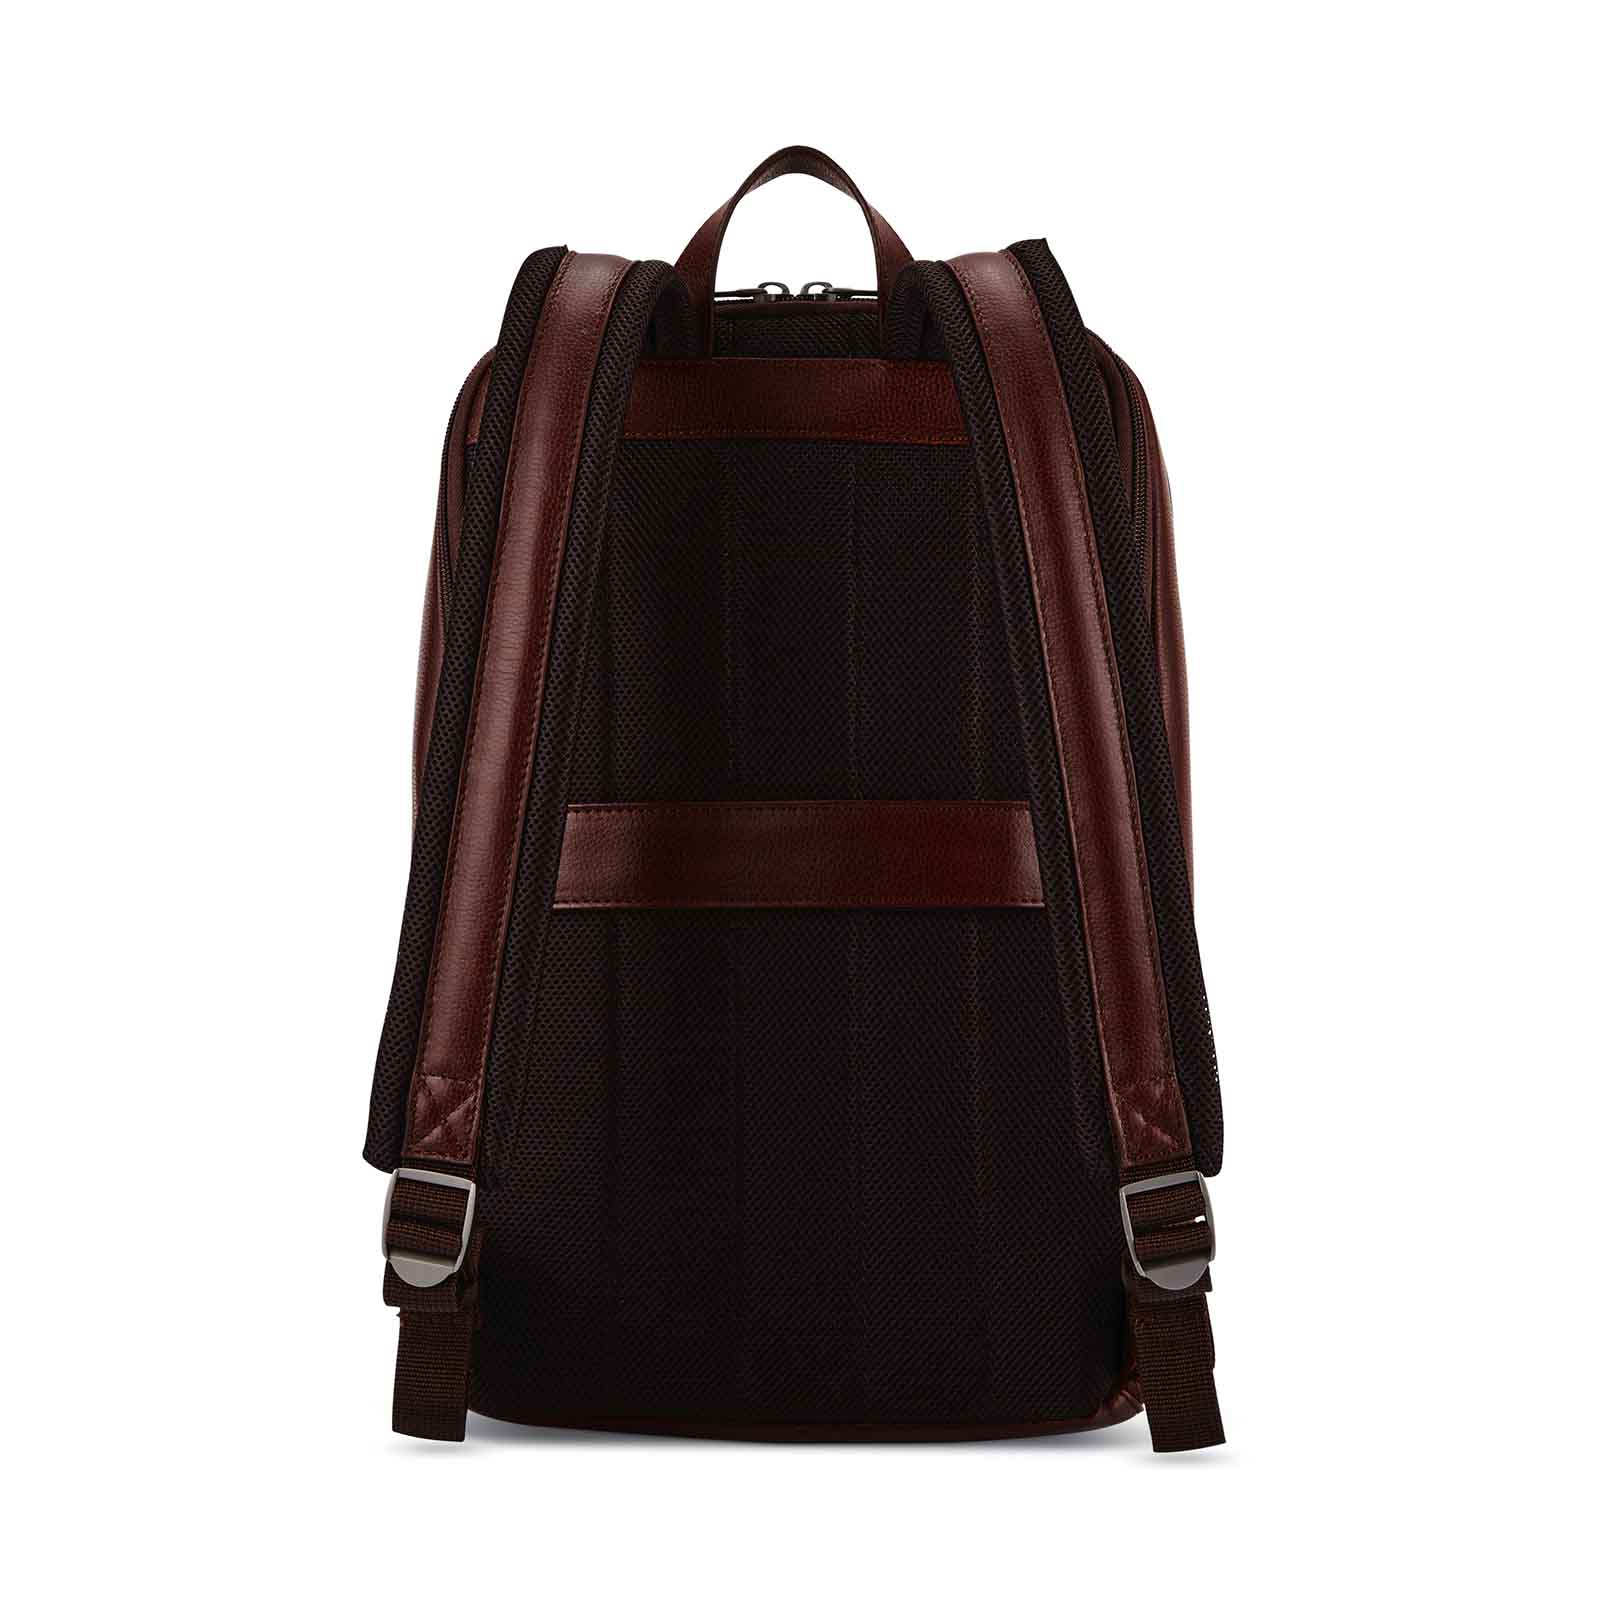 Samsonite-Classic-Leather-14-Inch-Laptop-Backpack-Mahogany-Back